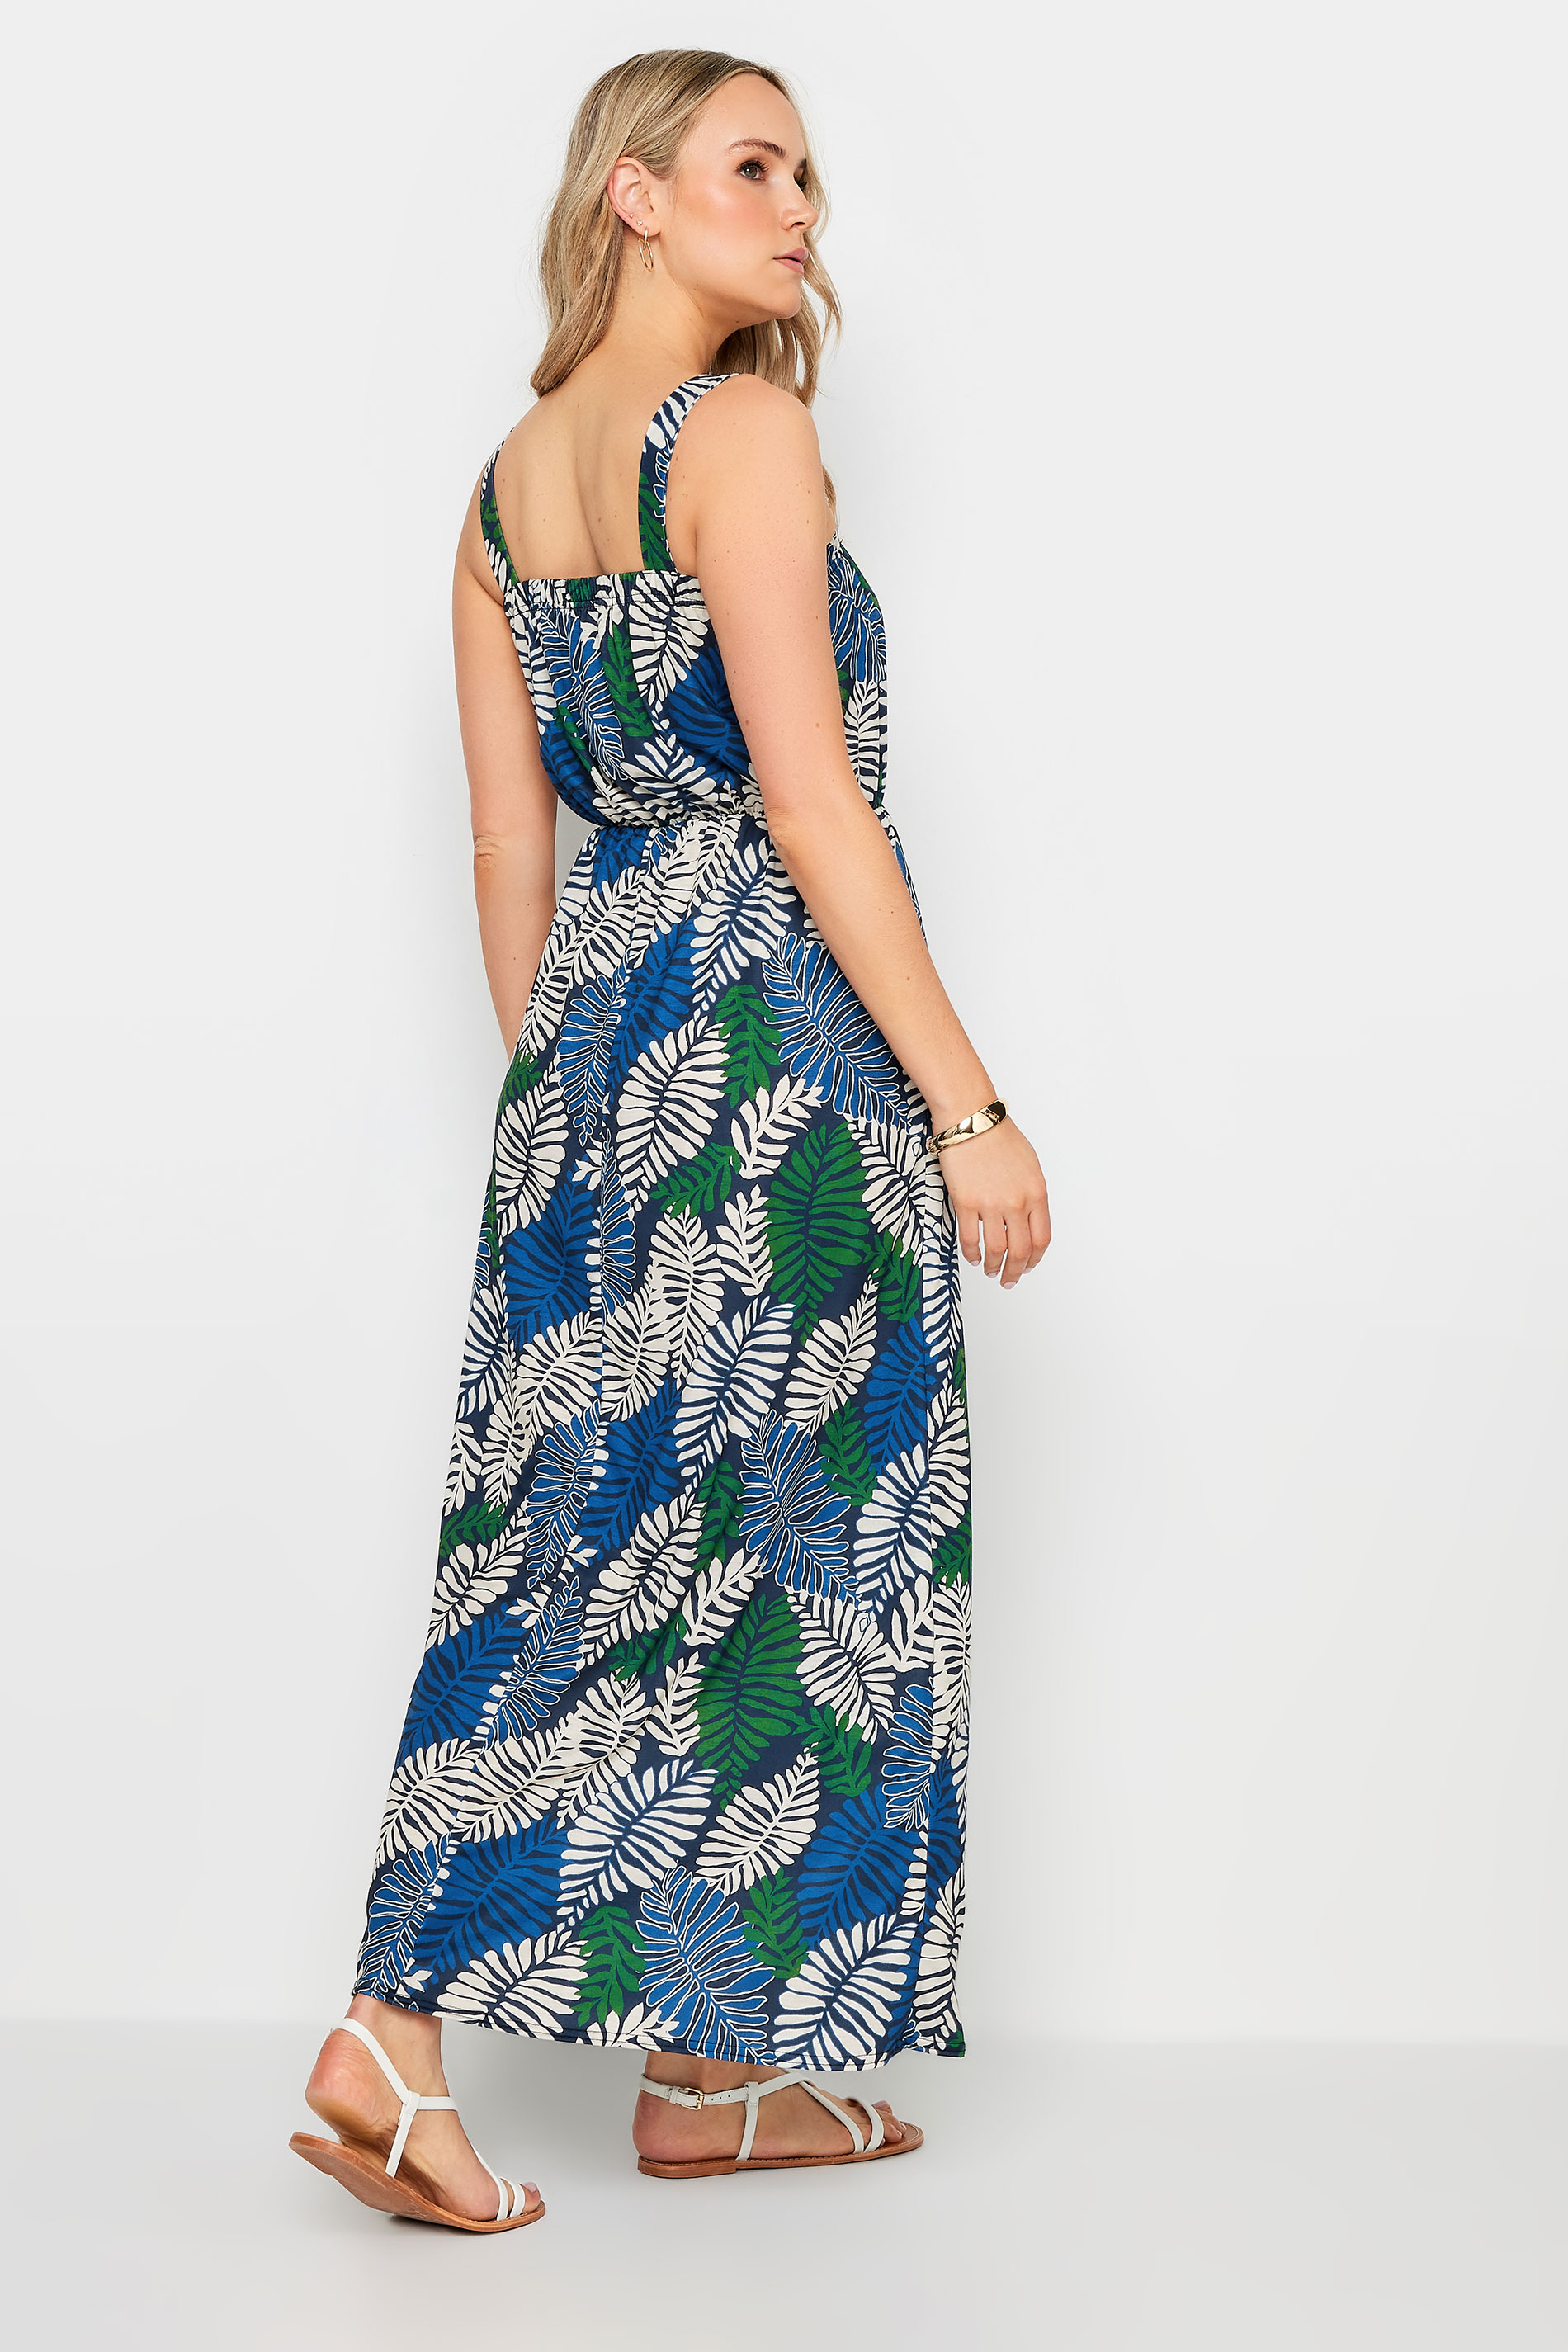 LTS Tall Women's Navy Blue Tropical Print Maxi Dress | Long Tall Sally 3